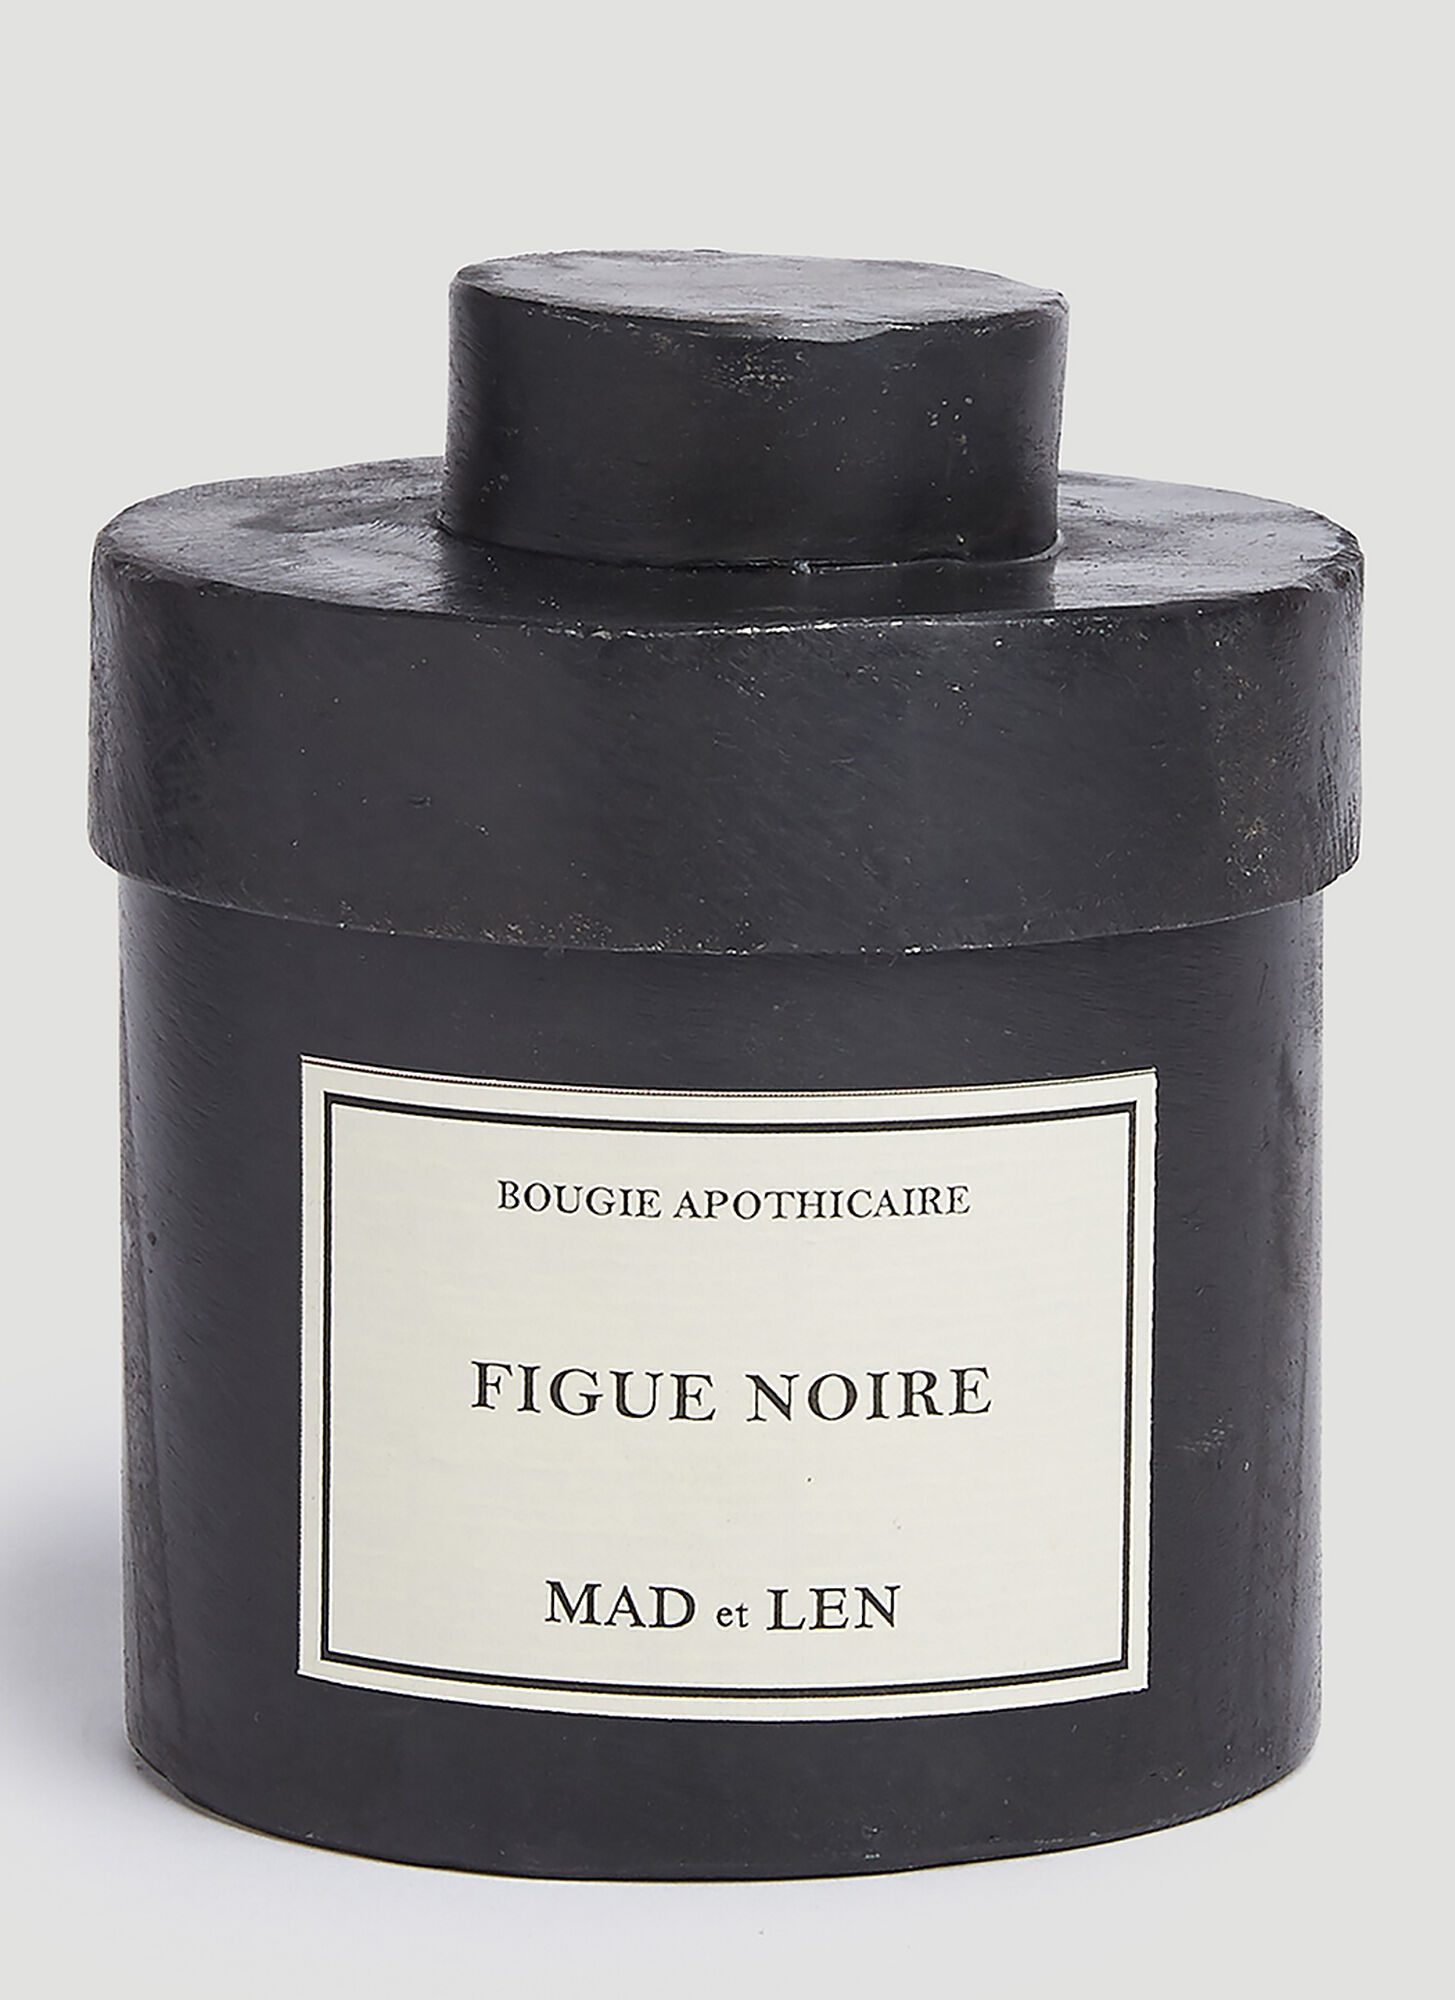 Mad & Len D'apothicaire Figue Noire Candle In Black